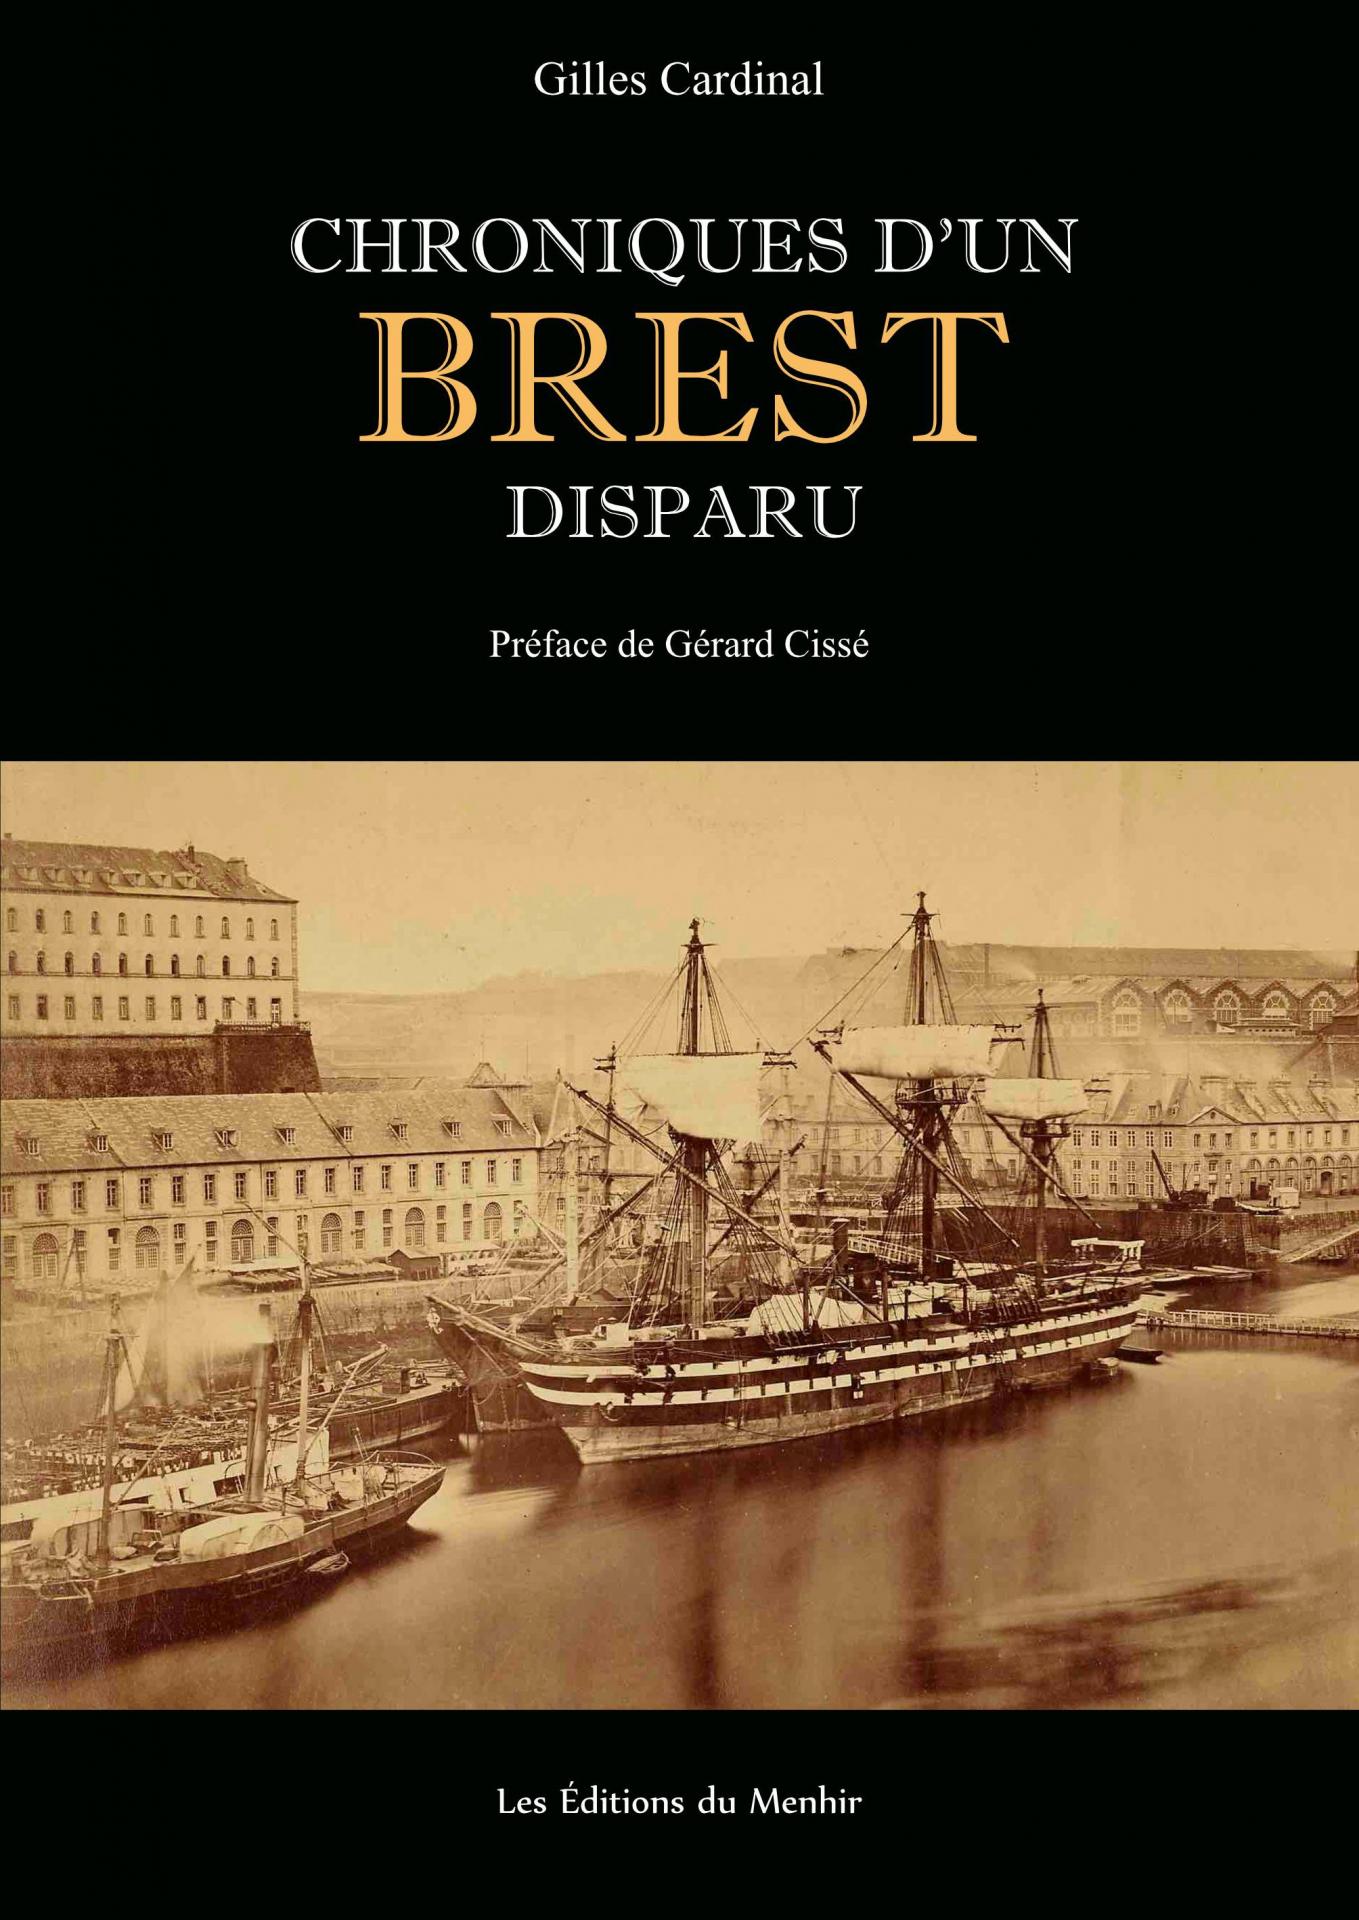 Brest disparu premiere couv 1